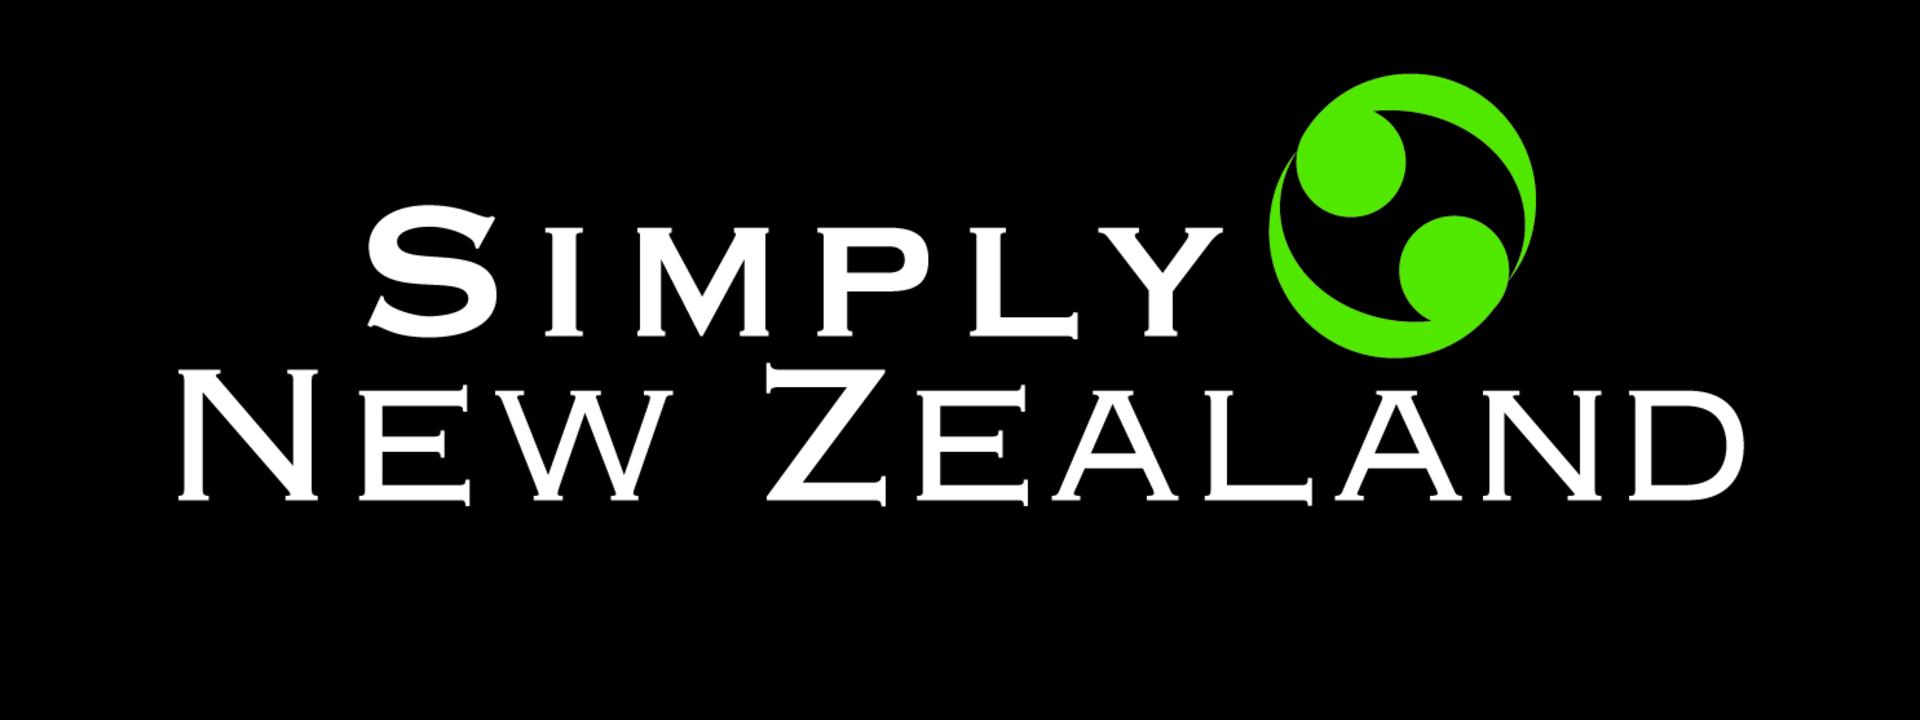 Simply NZ Logo Black - Landscape JPG.jpg